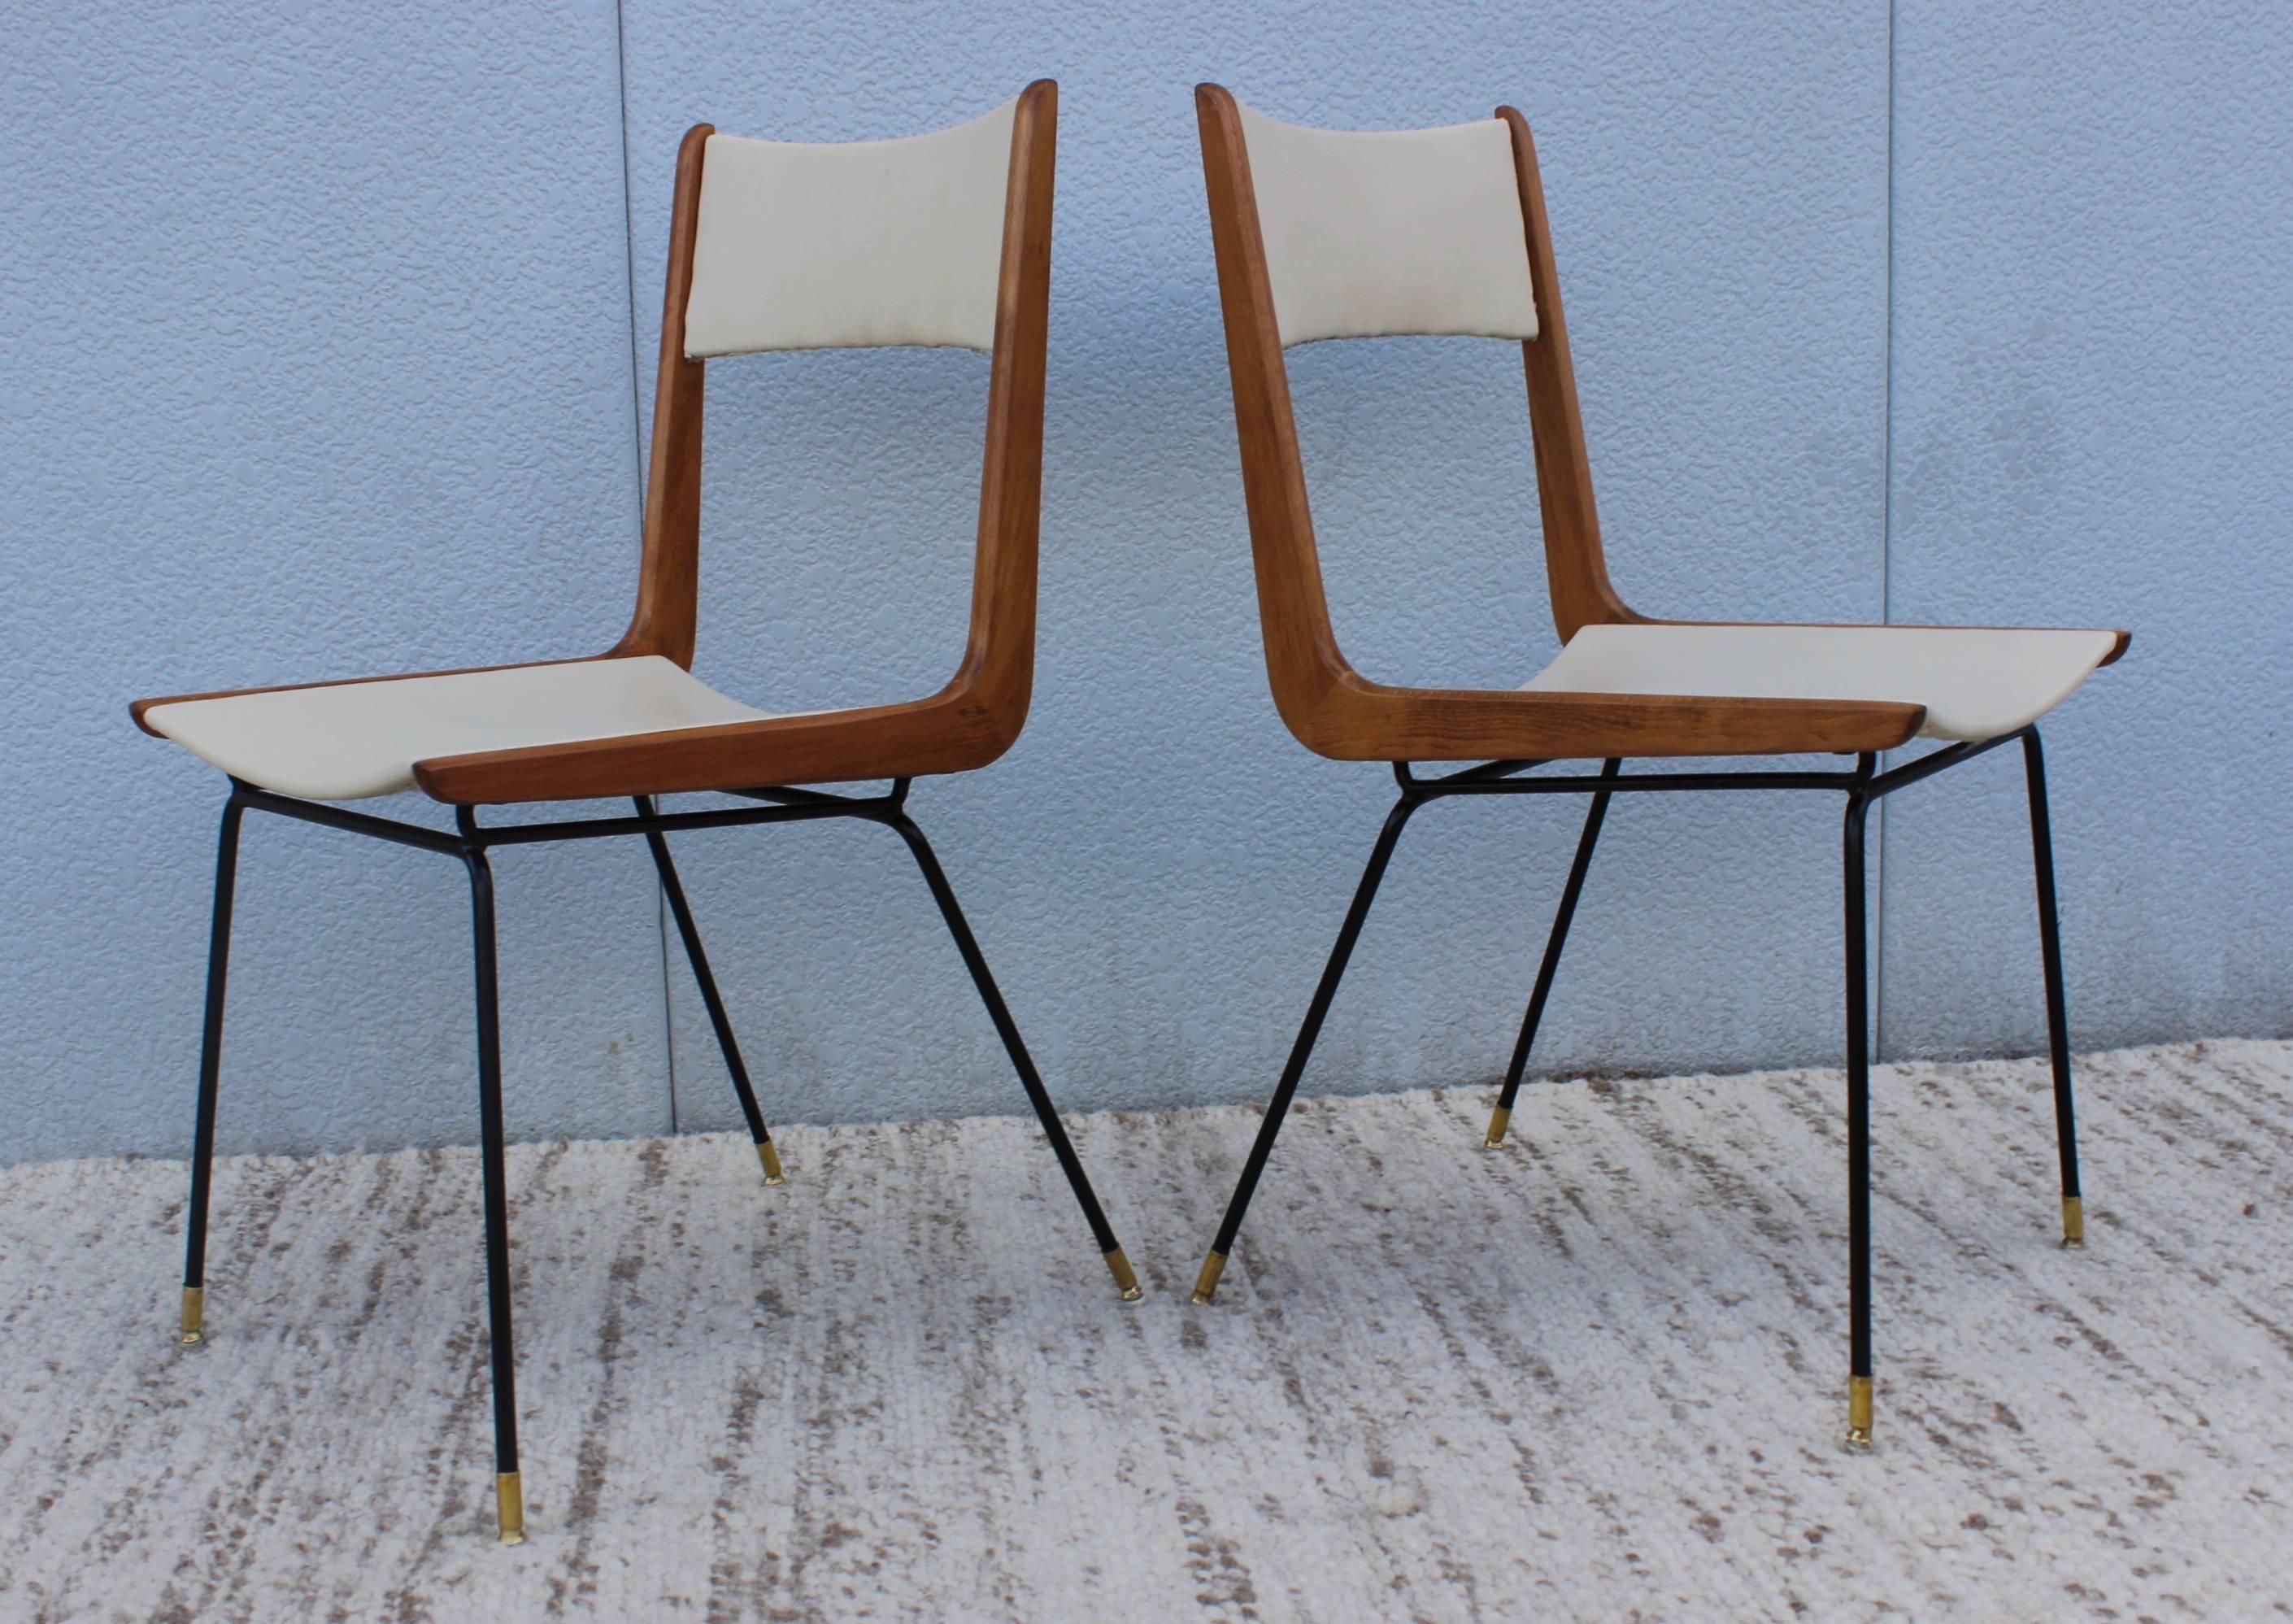 Mid-Century Modern Dining Chairs, style of Carlo di Carli, ca. 1958